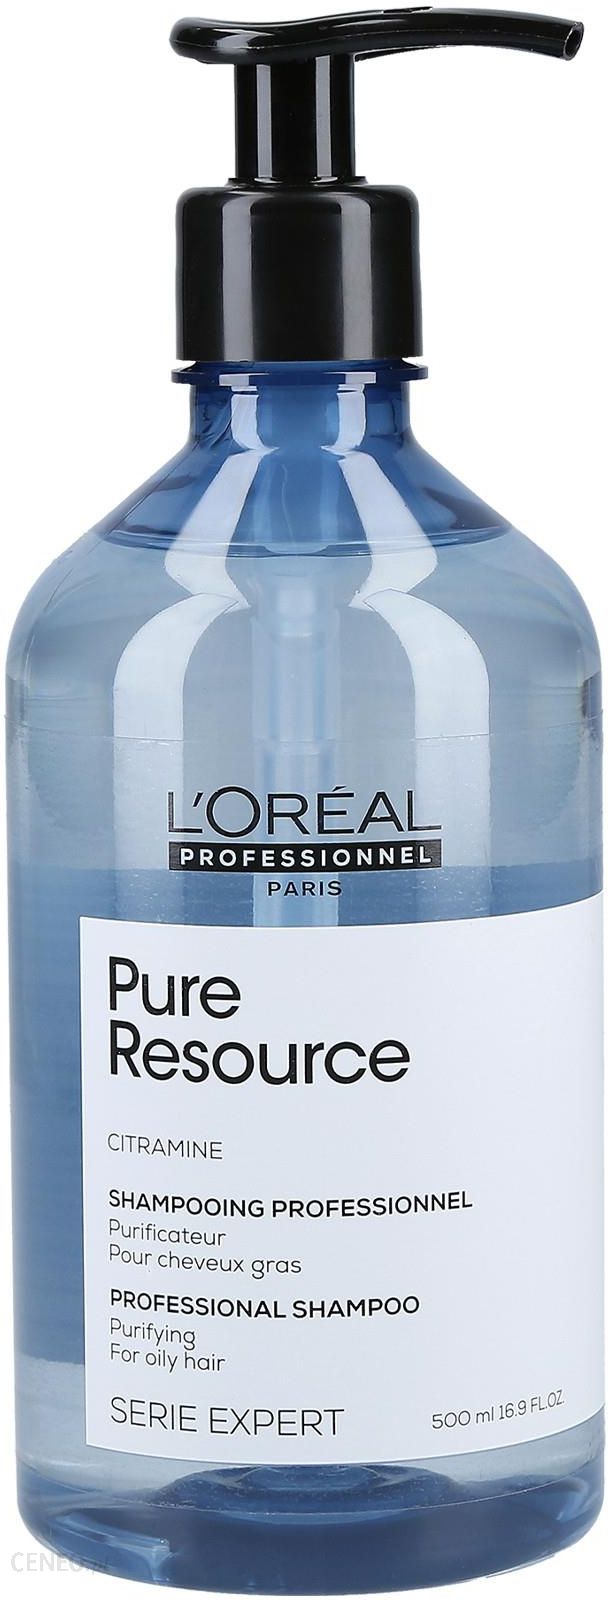 szampon loreal citramine pure resource